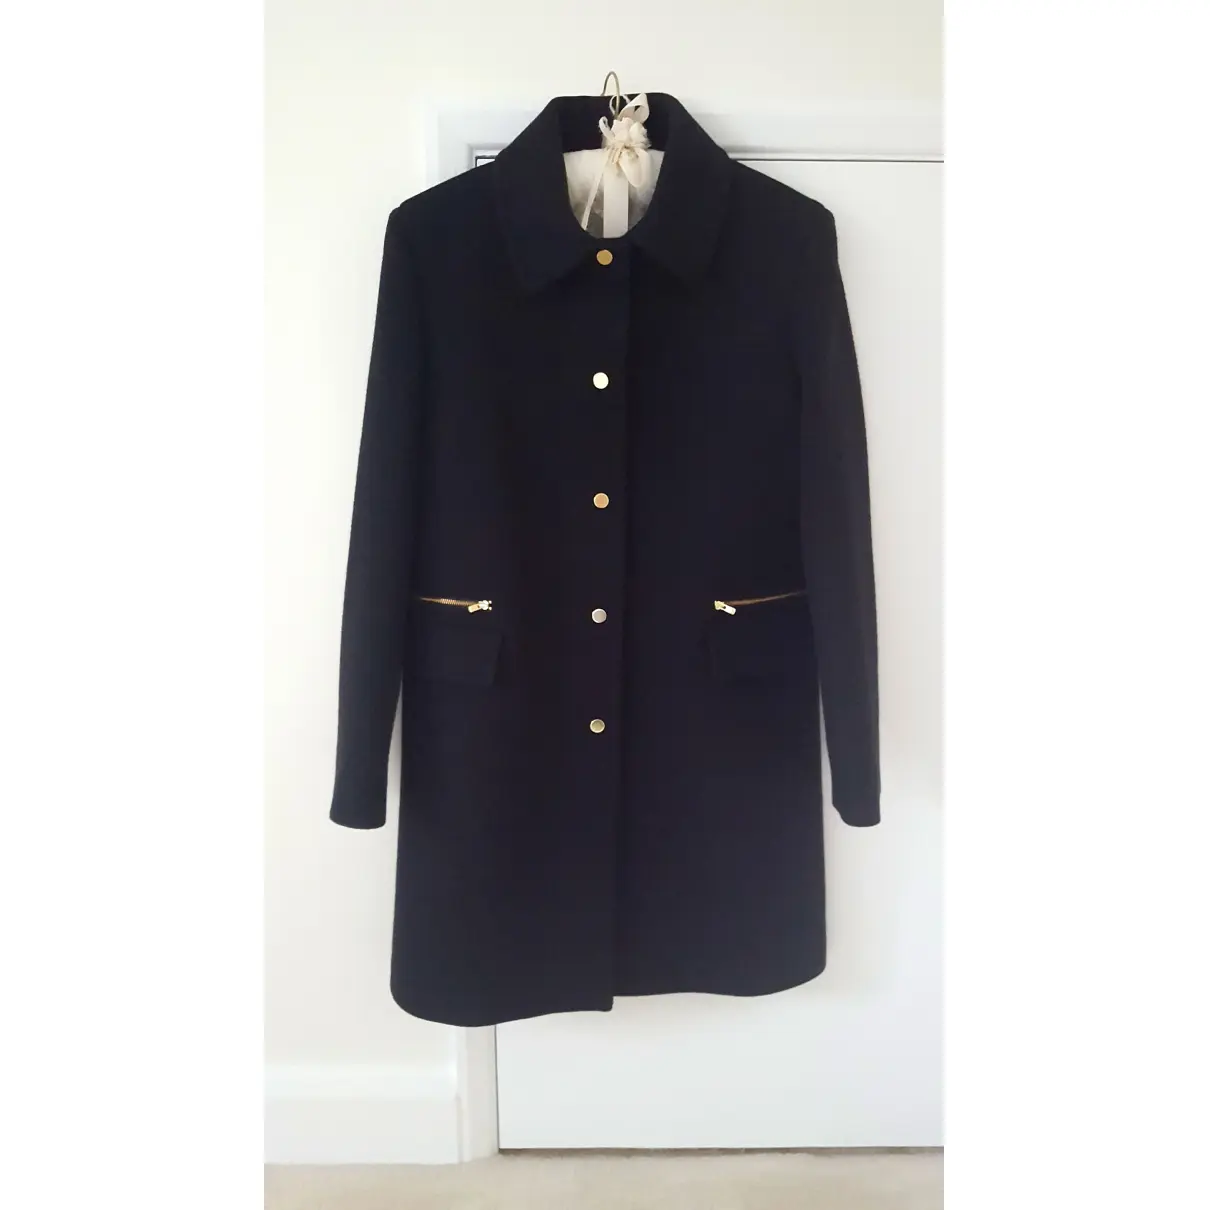 Buy Gerard Darel Wool coat online